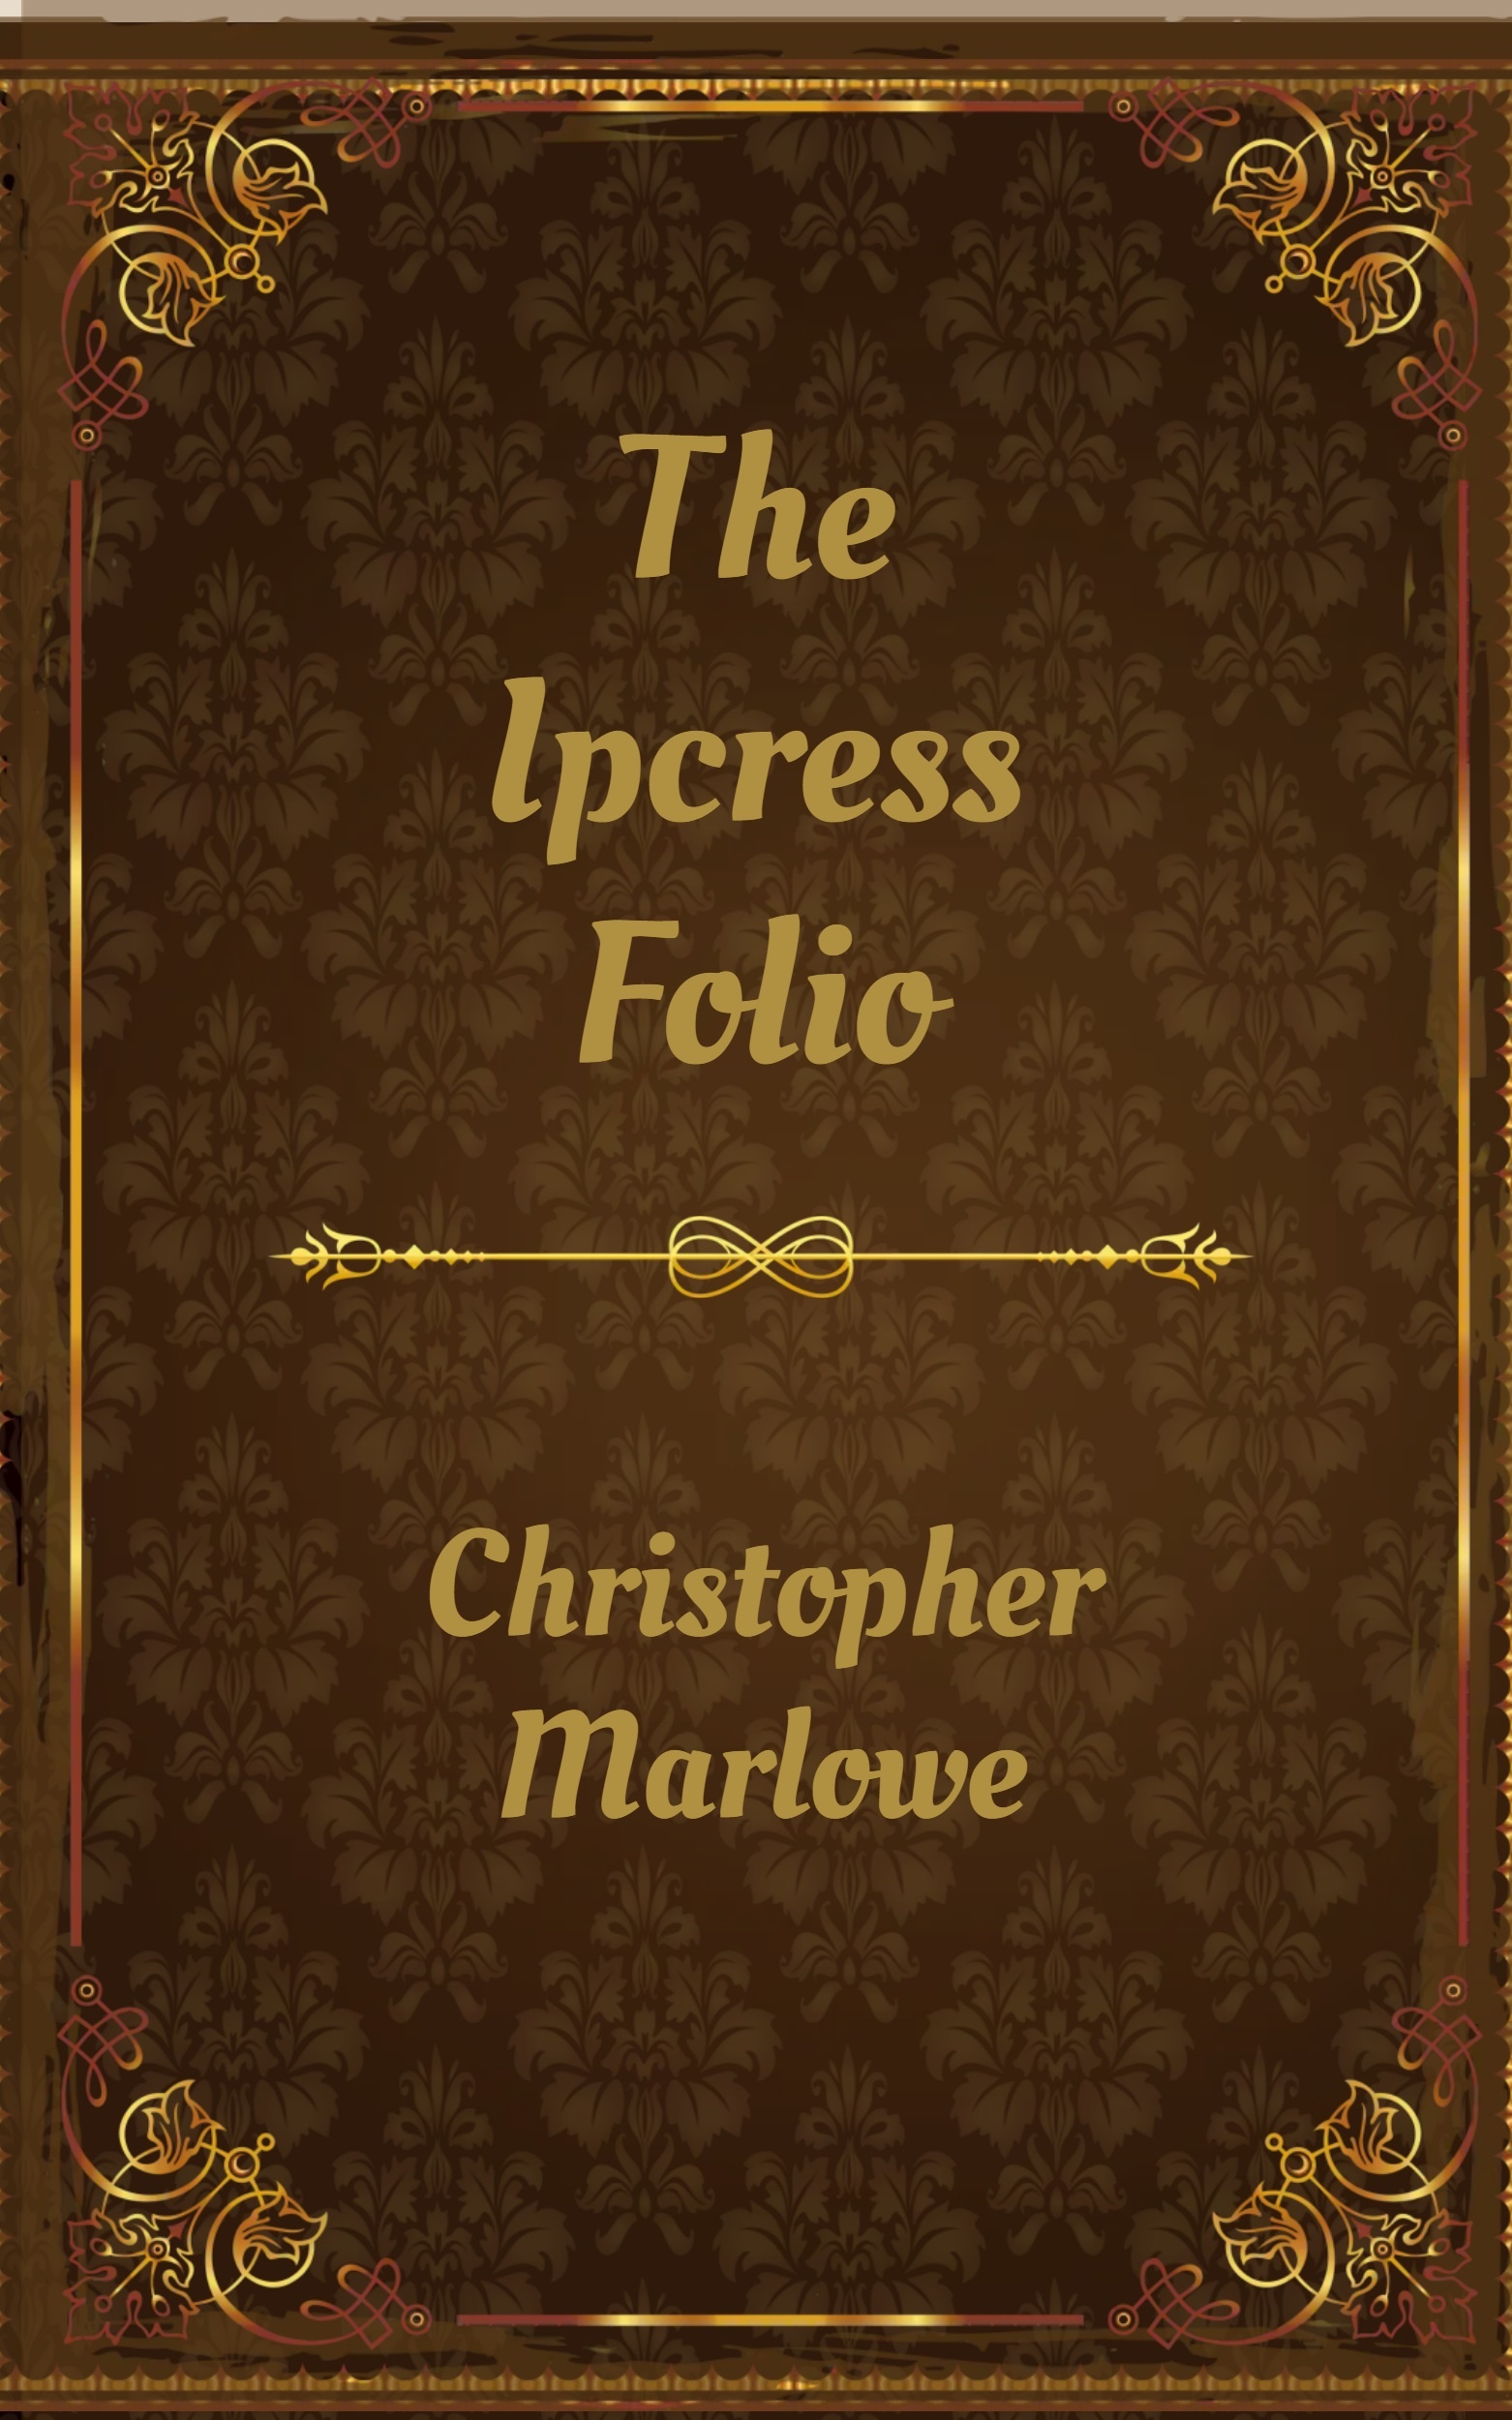 The Ipcress Folio Cover.jpg